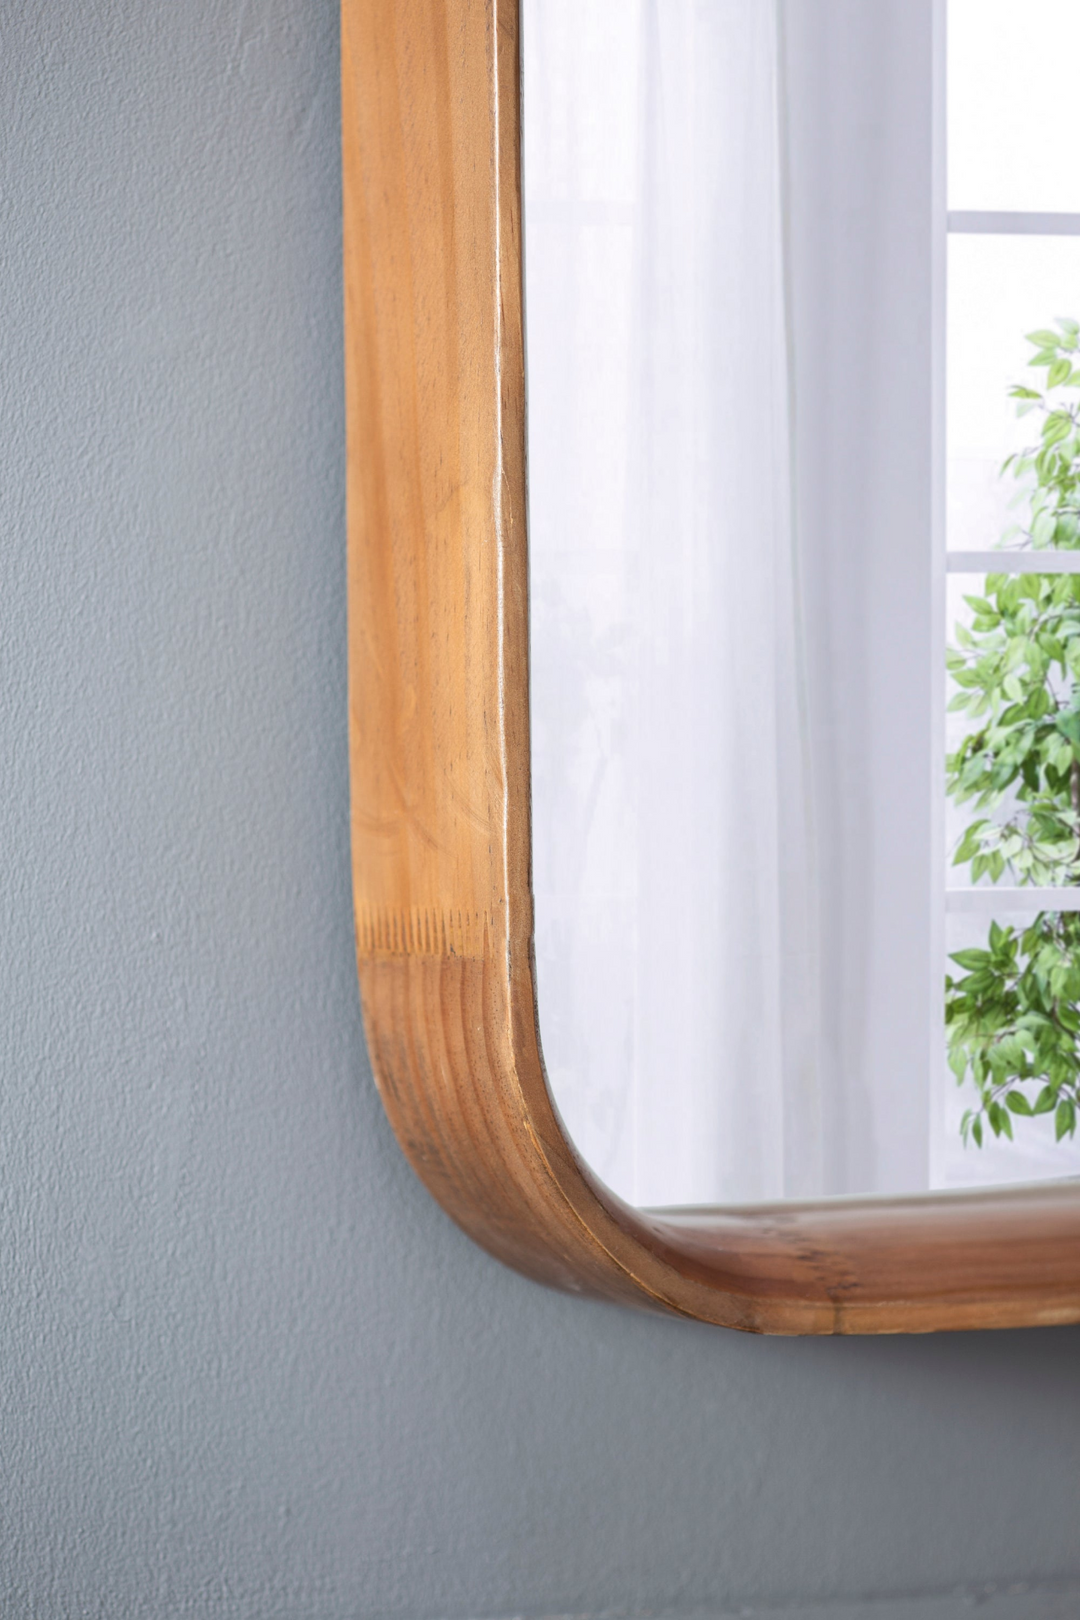 32"x32" Wood Framed Square Wall Mirror | Minimalist Design for Living Room & Bathroom